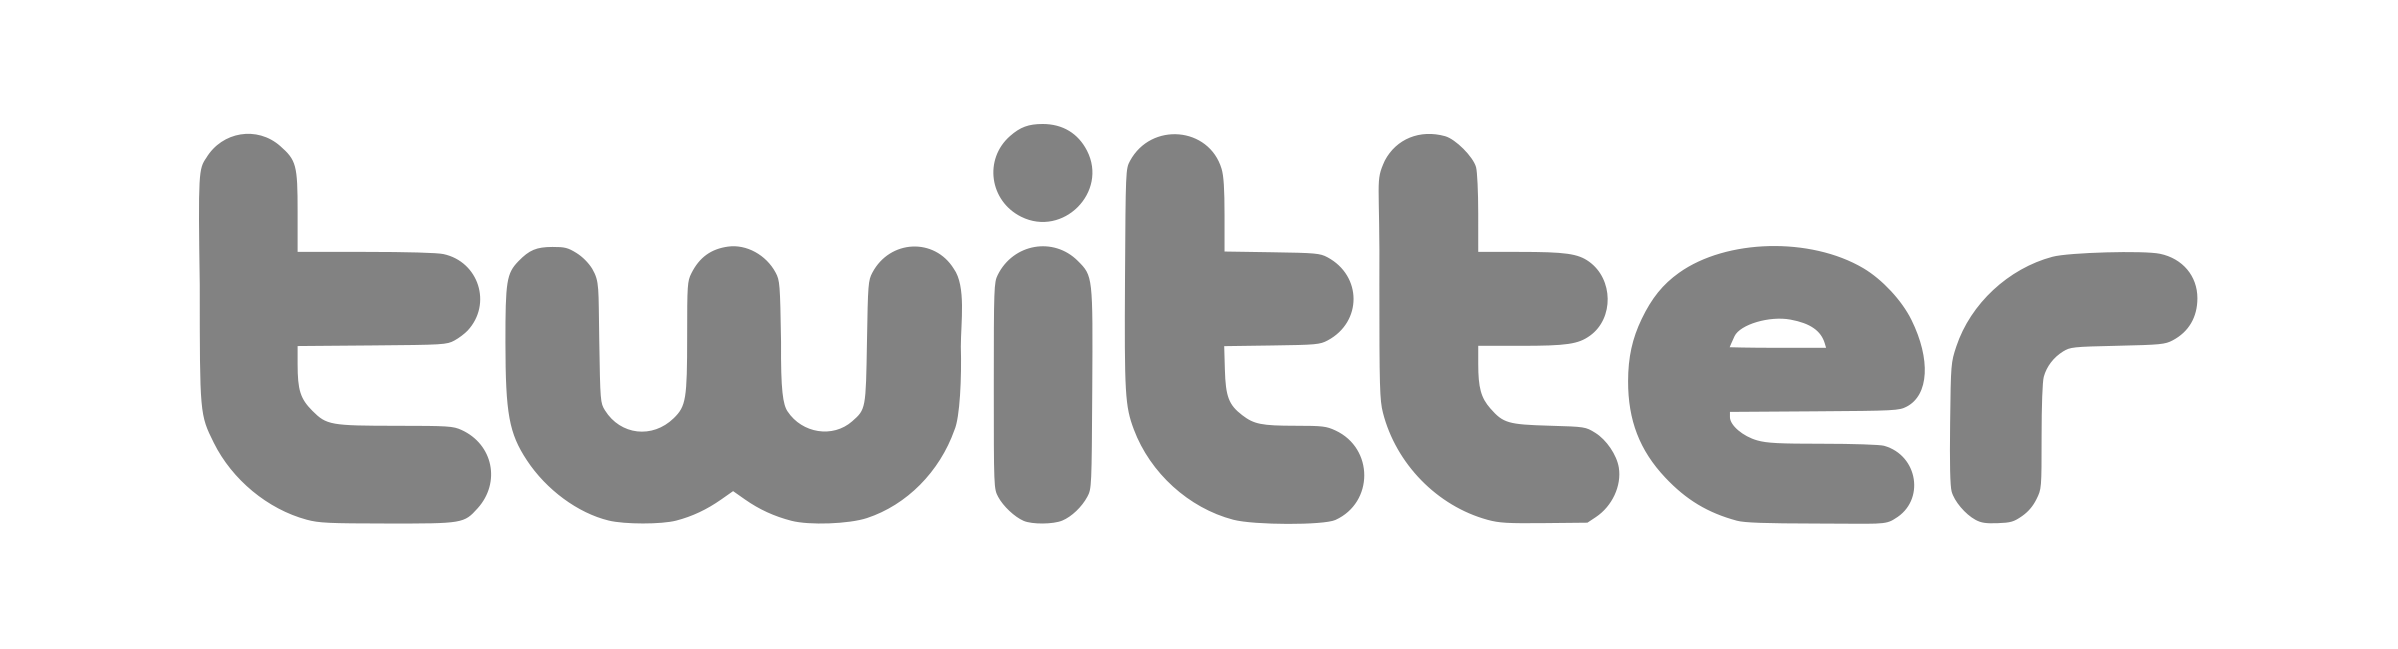 Twitter company